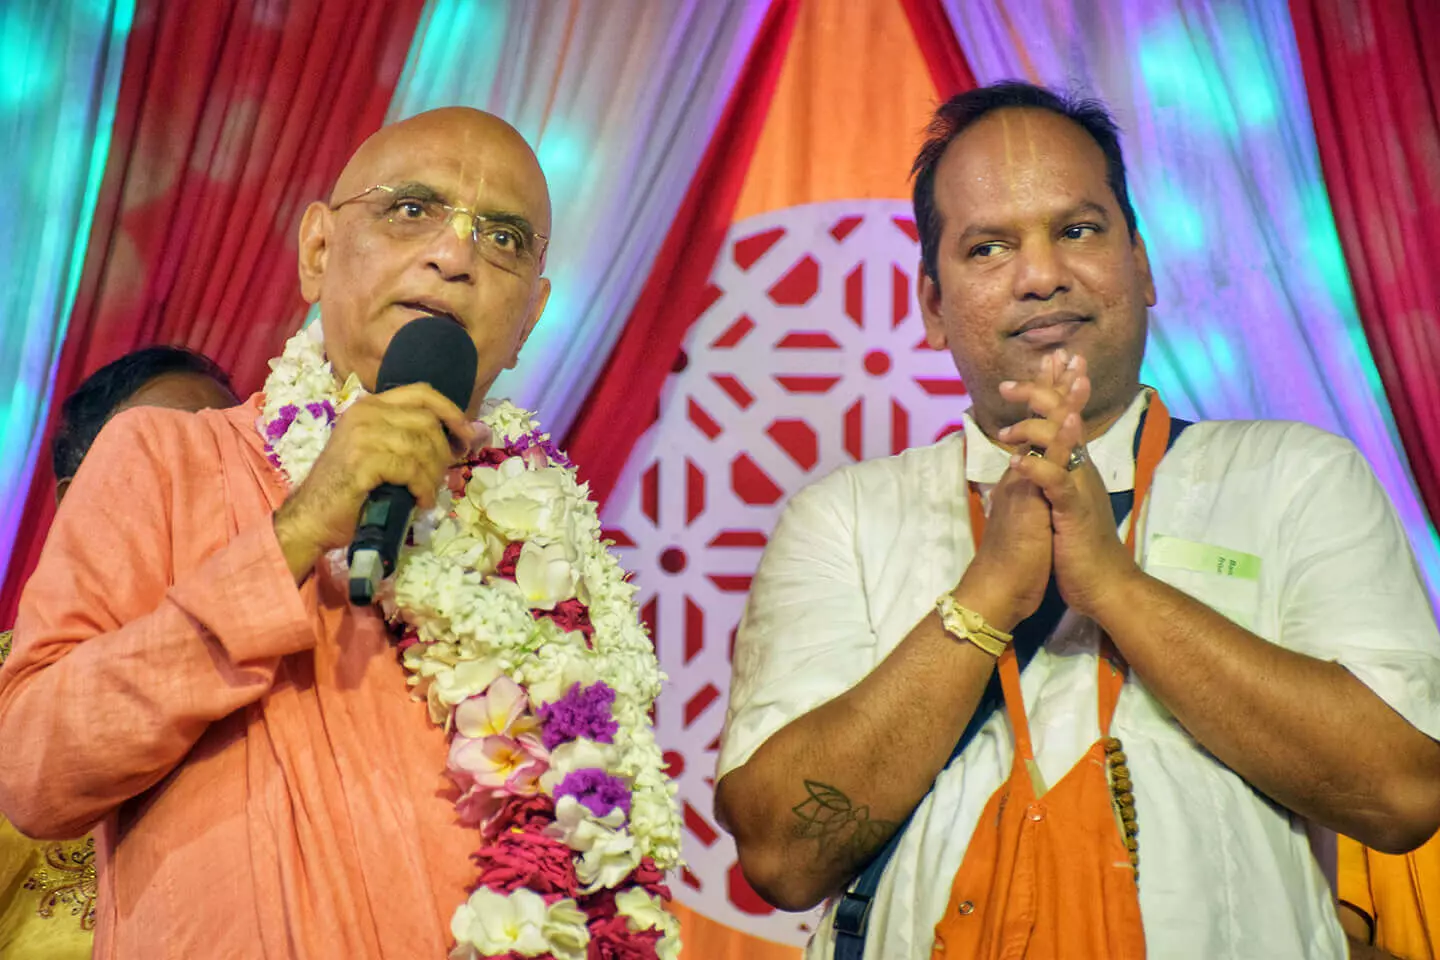 Bhakti Caru Swami 与 Braja Vilas das 在孟加拉国的节目中登台